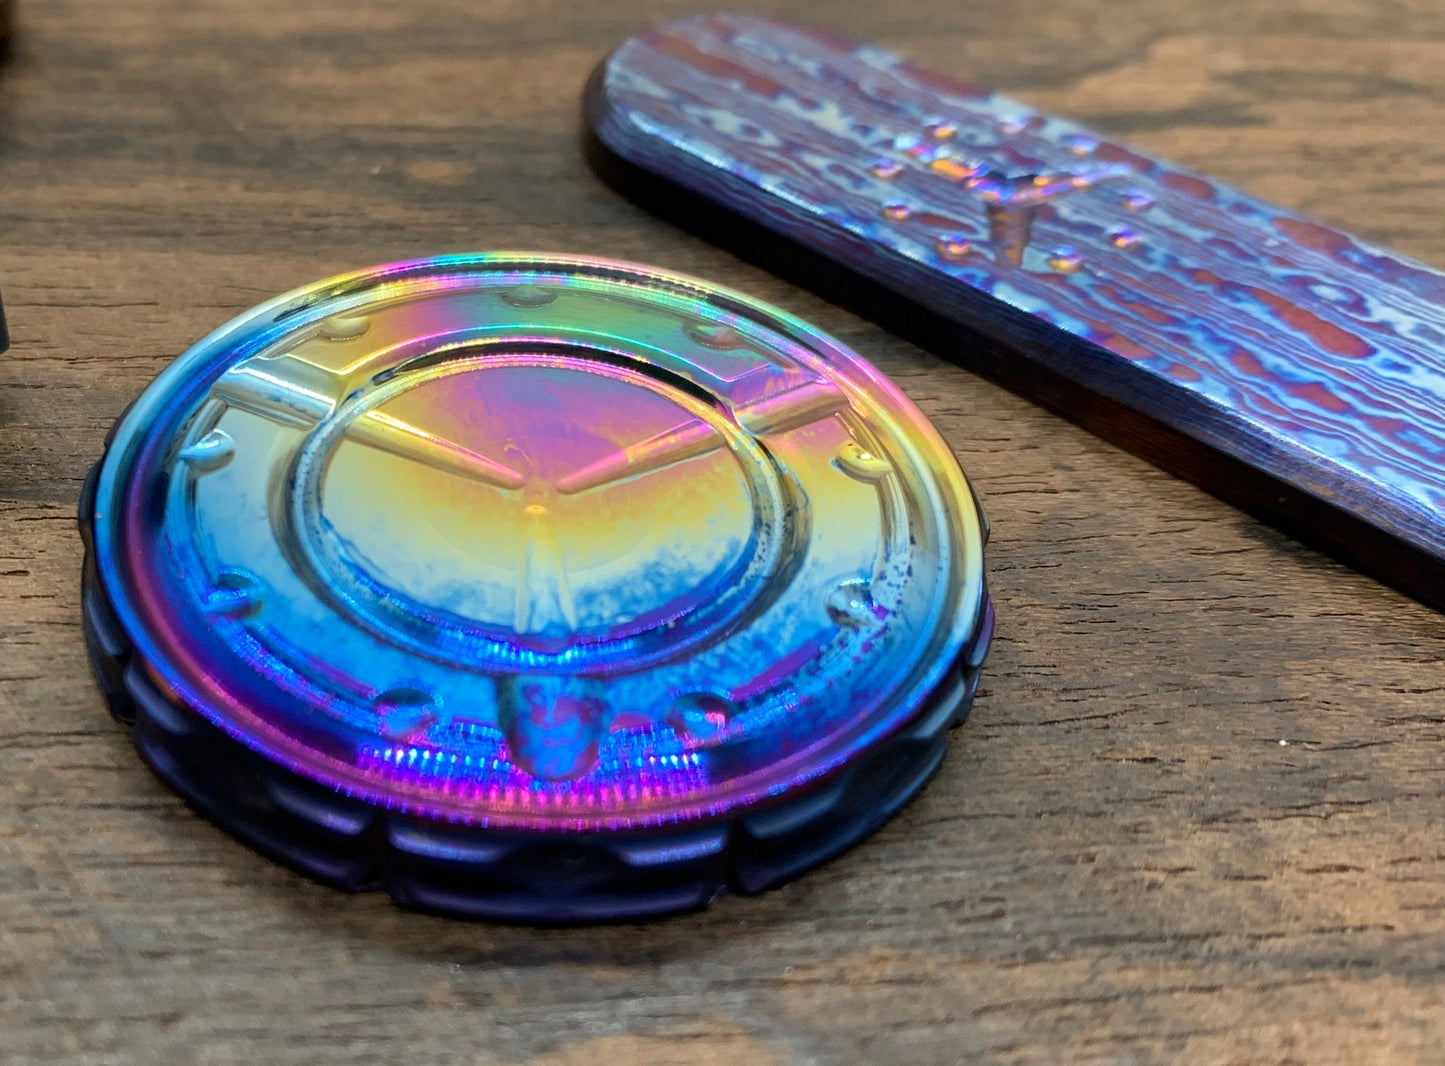 Rainbow Flamed & Polished Titanium MEGATRON Worry Coin